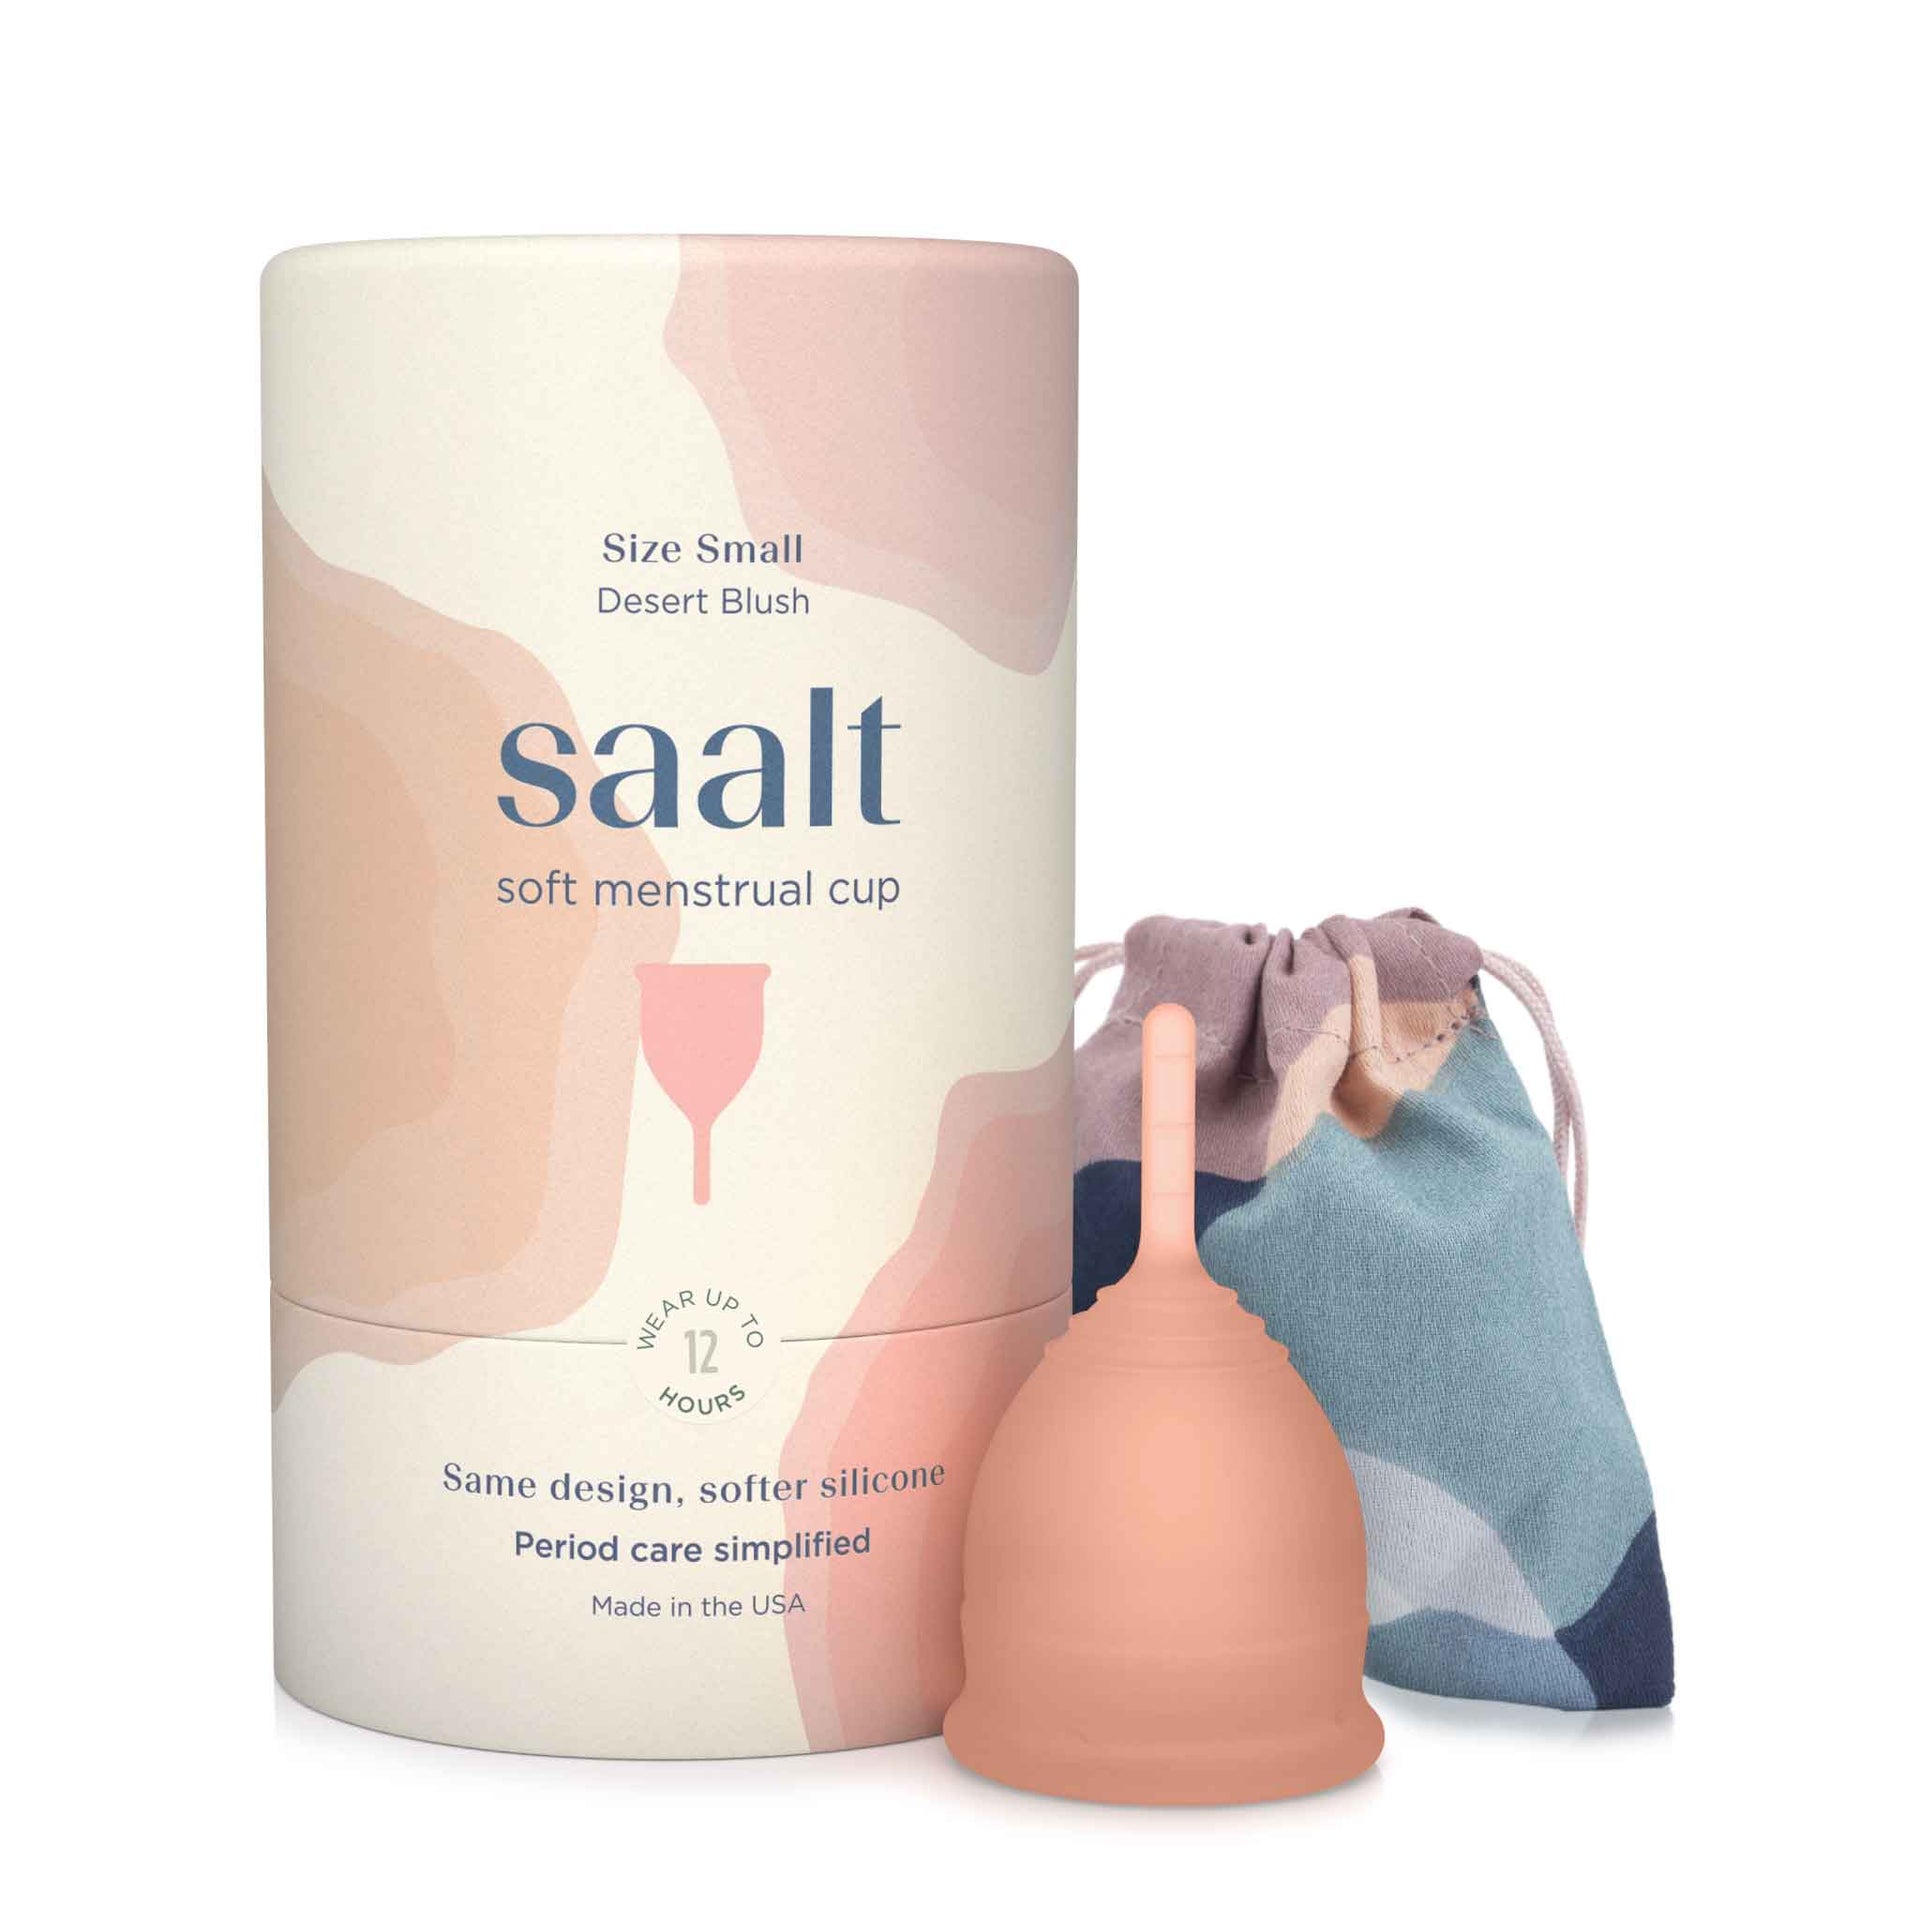 Saalt Soft Menstrual cup